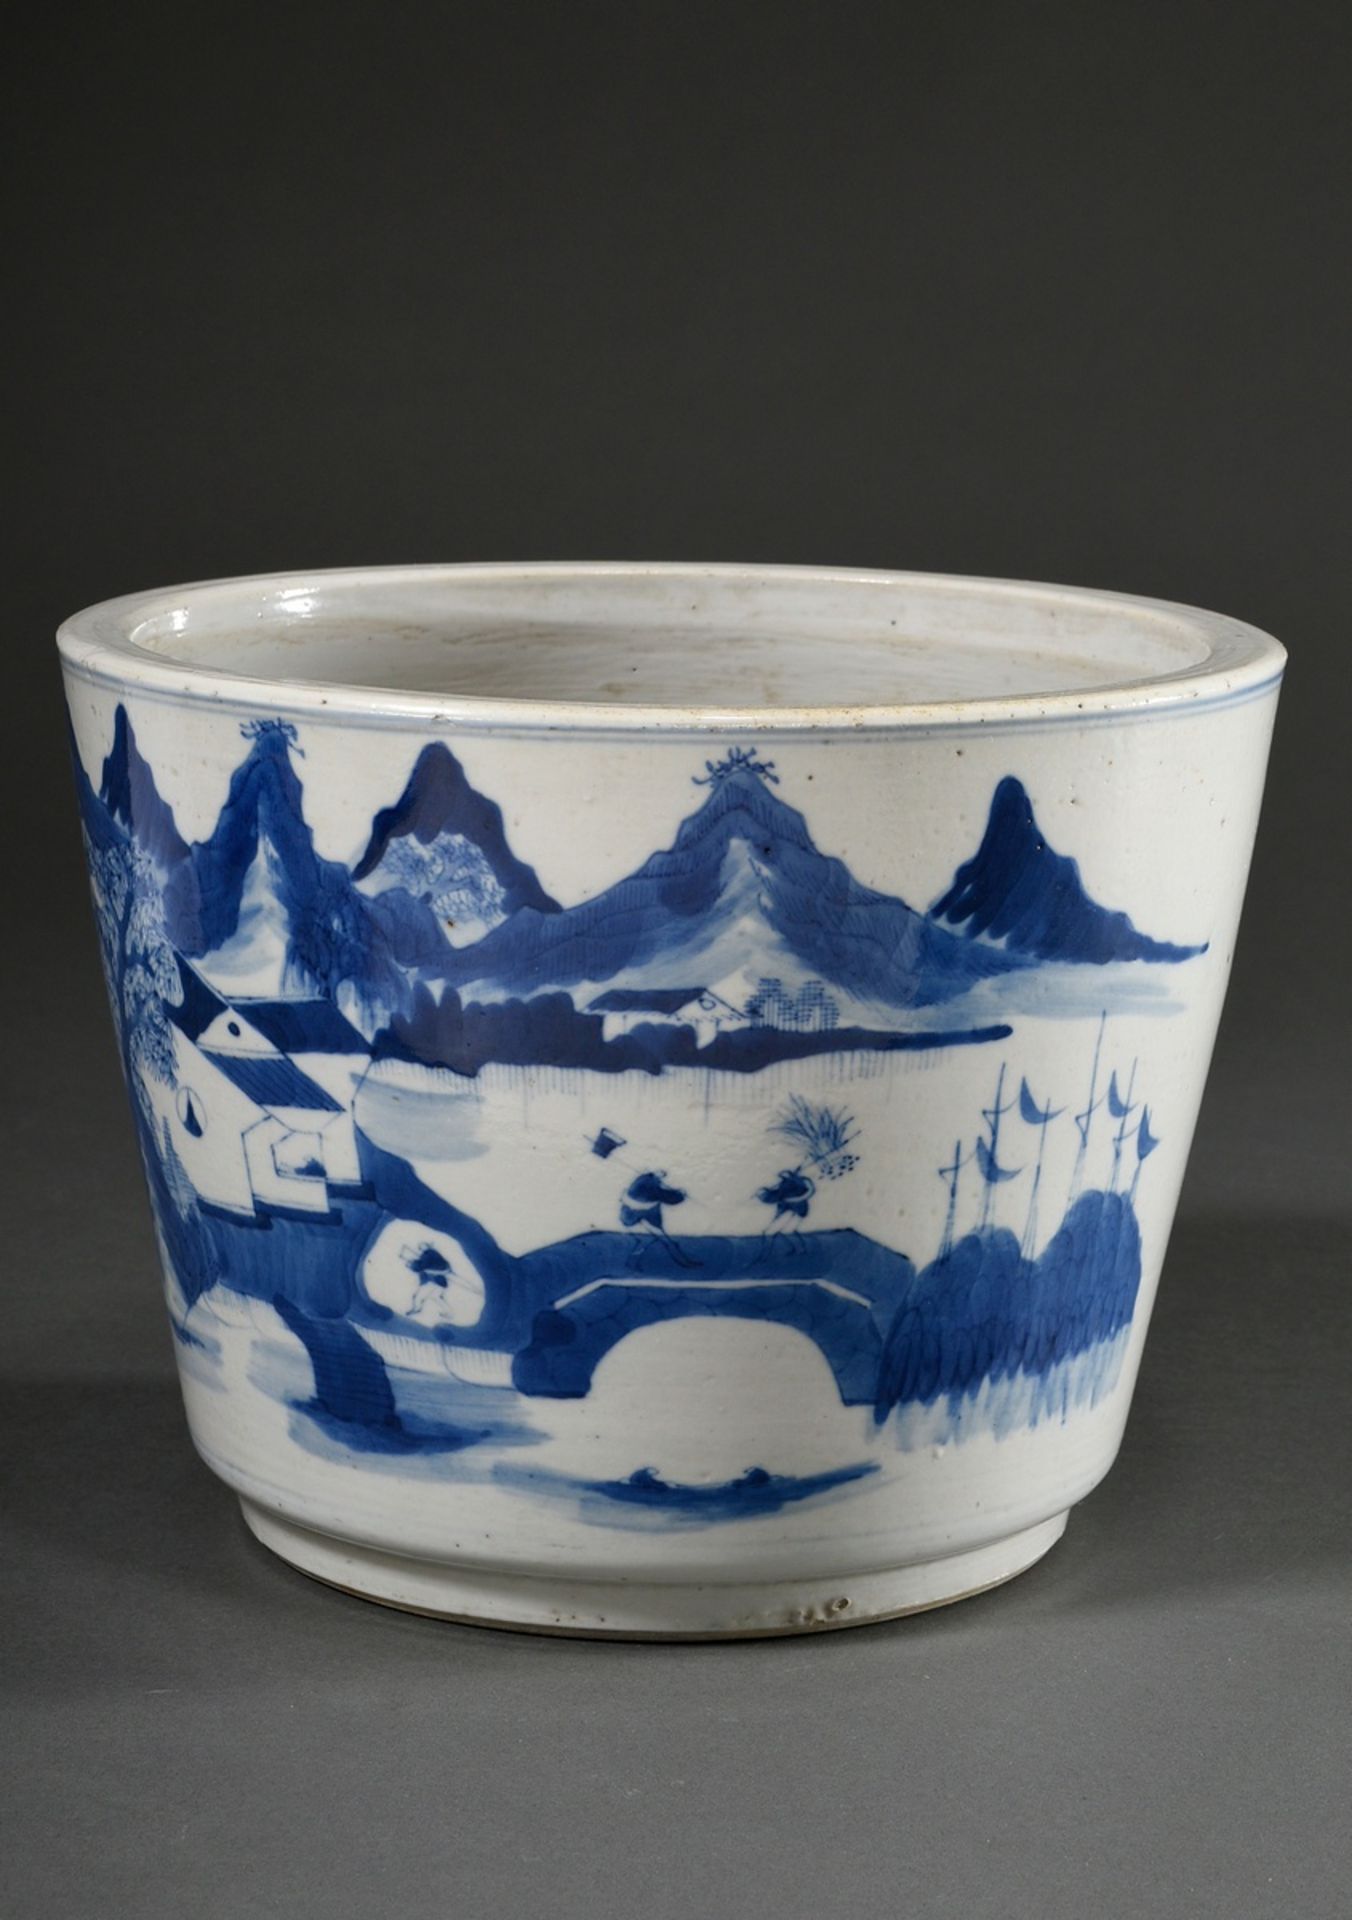 Porzellan Übertopf mit Blaumalerei "Landschaft", China 19.Jh., H. 19cm, Ø 22,5cm, Boden durchbohrt - Bild 3 aus 7